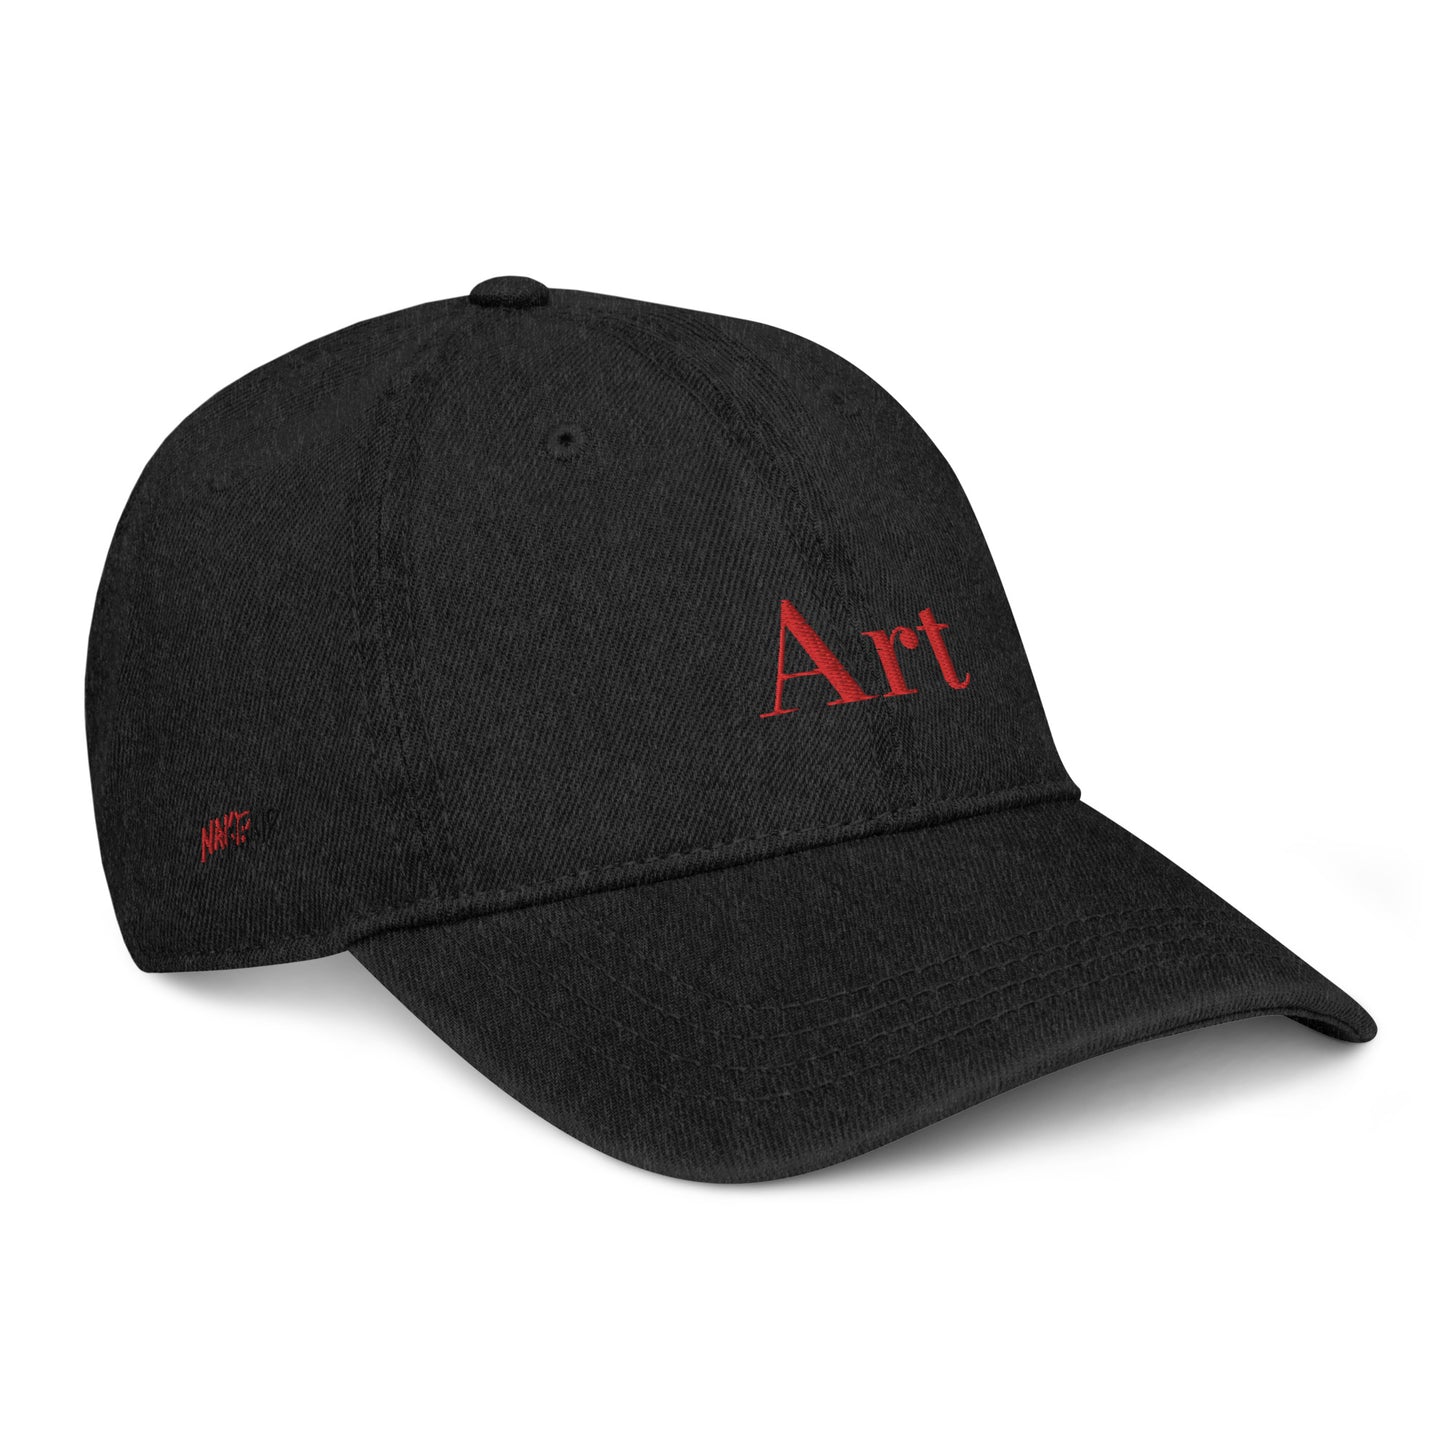 “Art" - Denim Hat